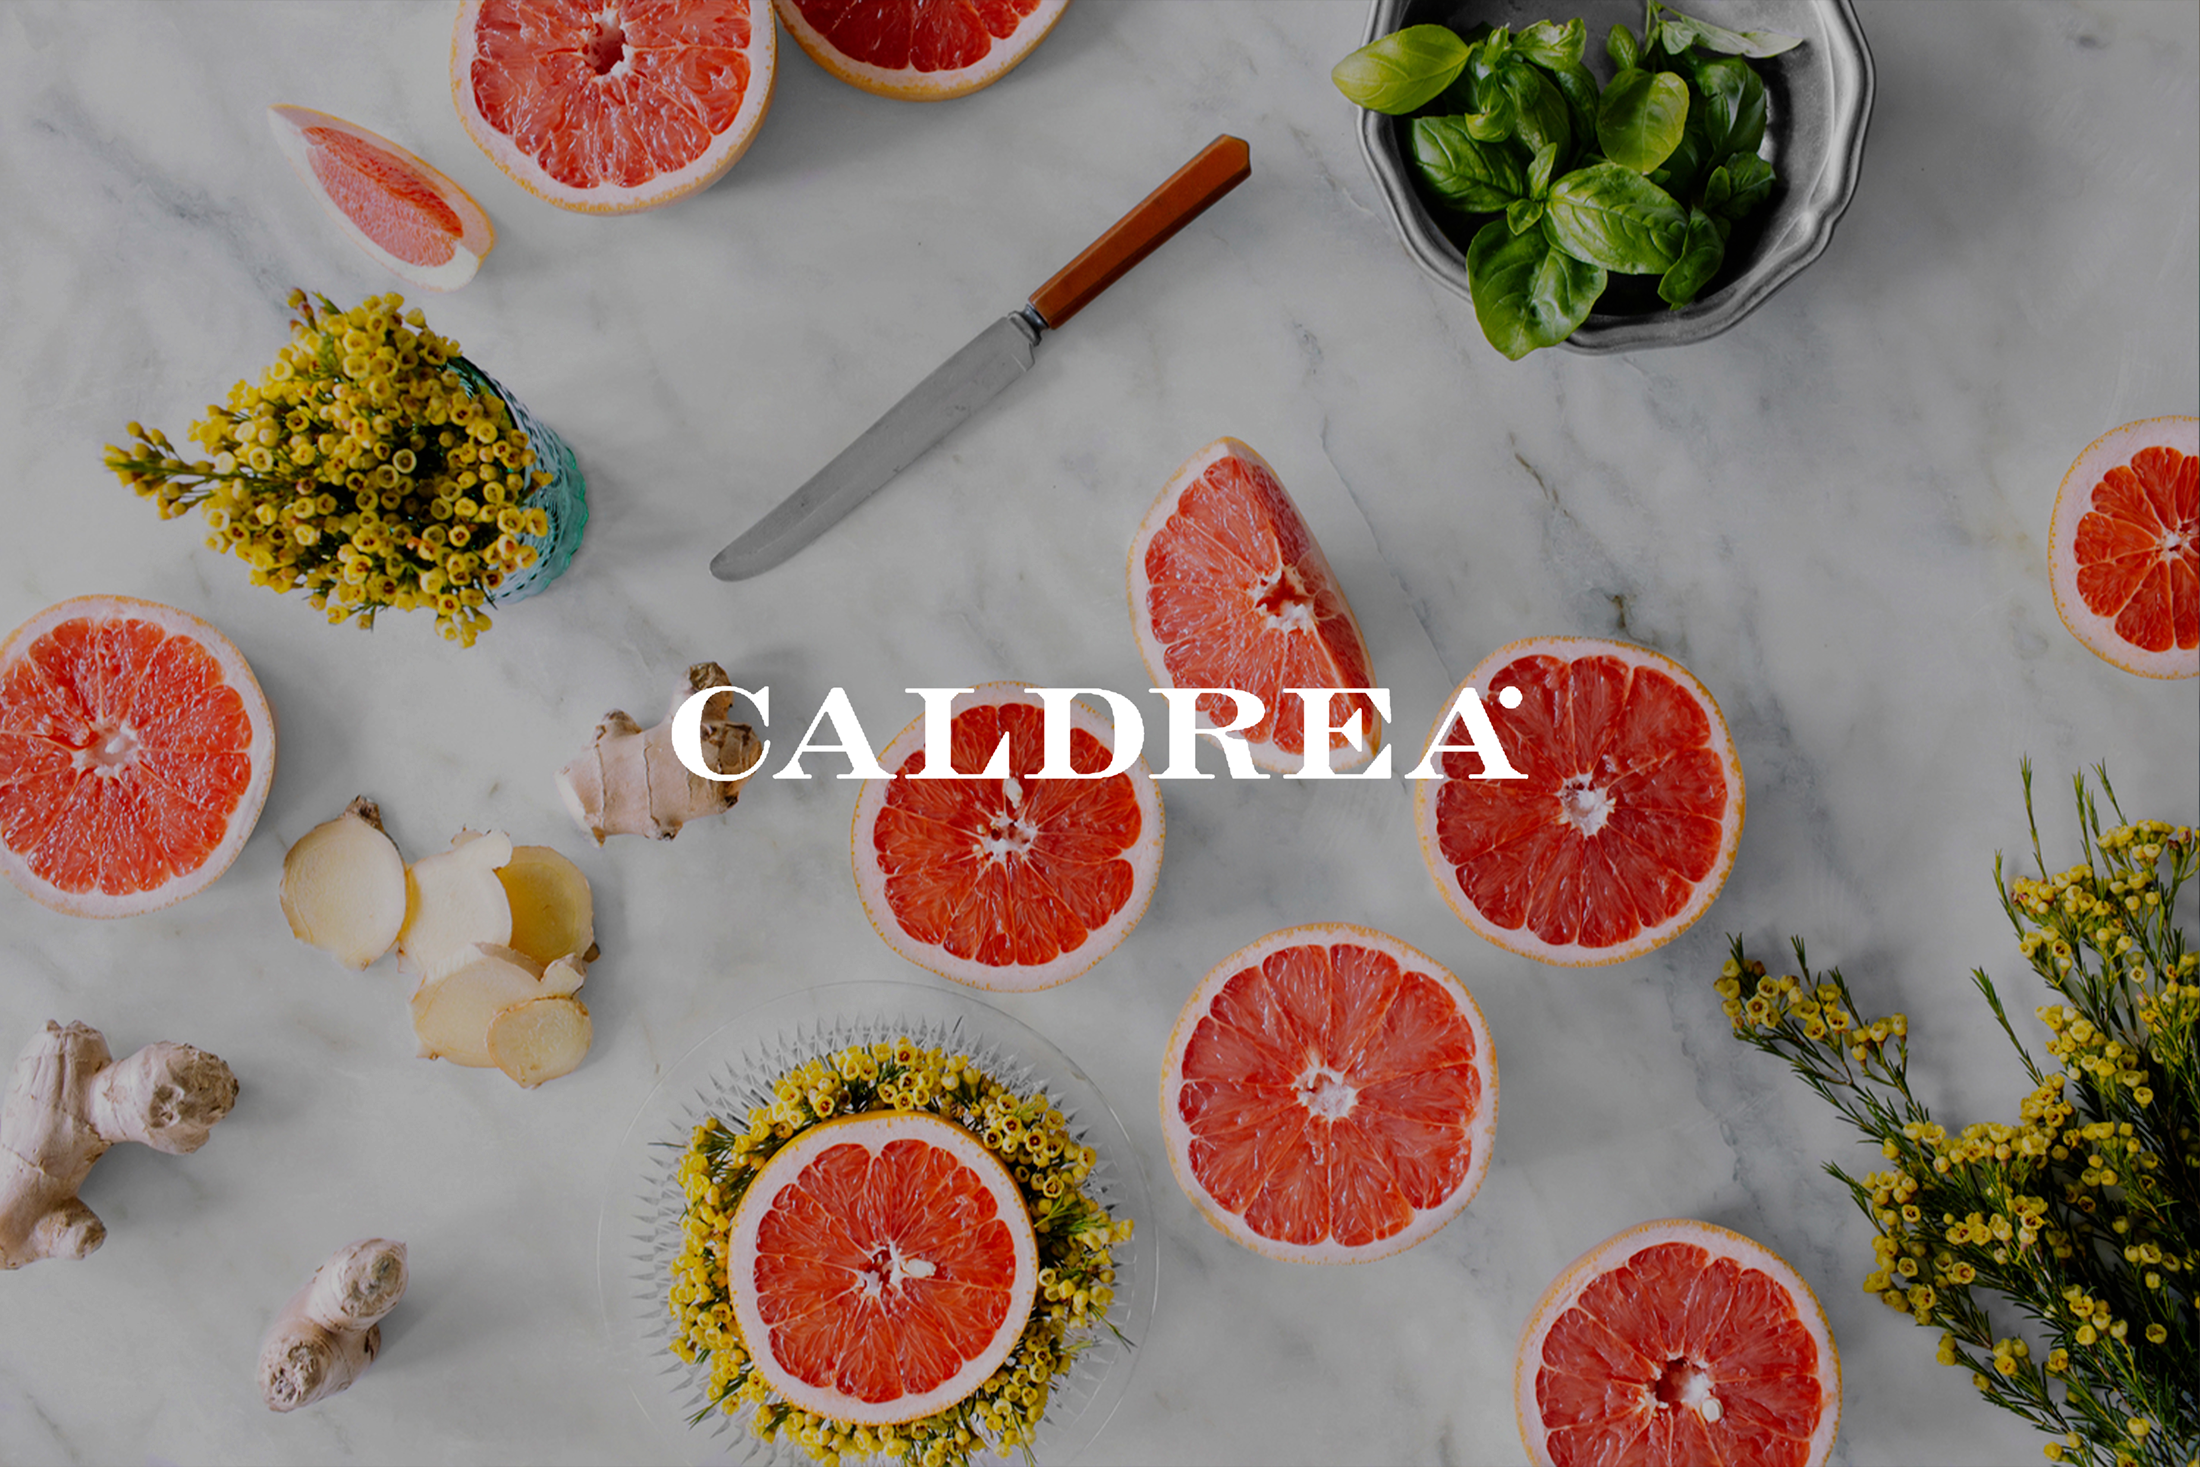 richter-website-cover-caldrea